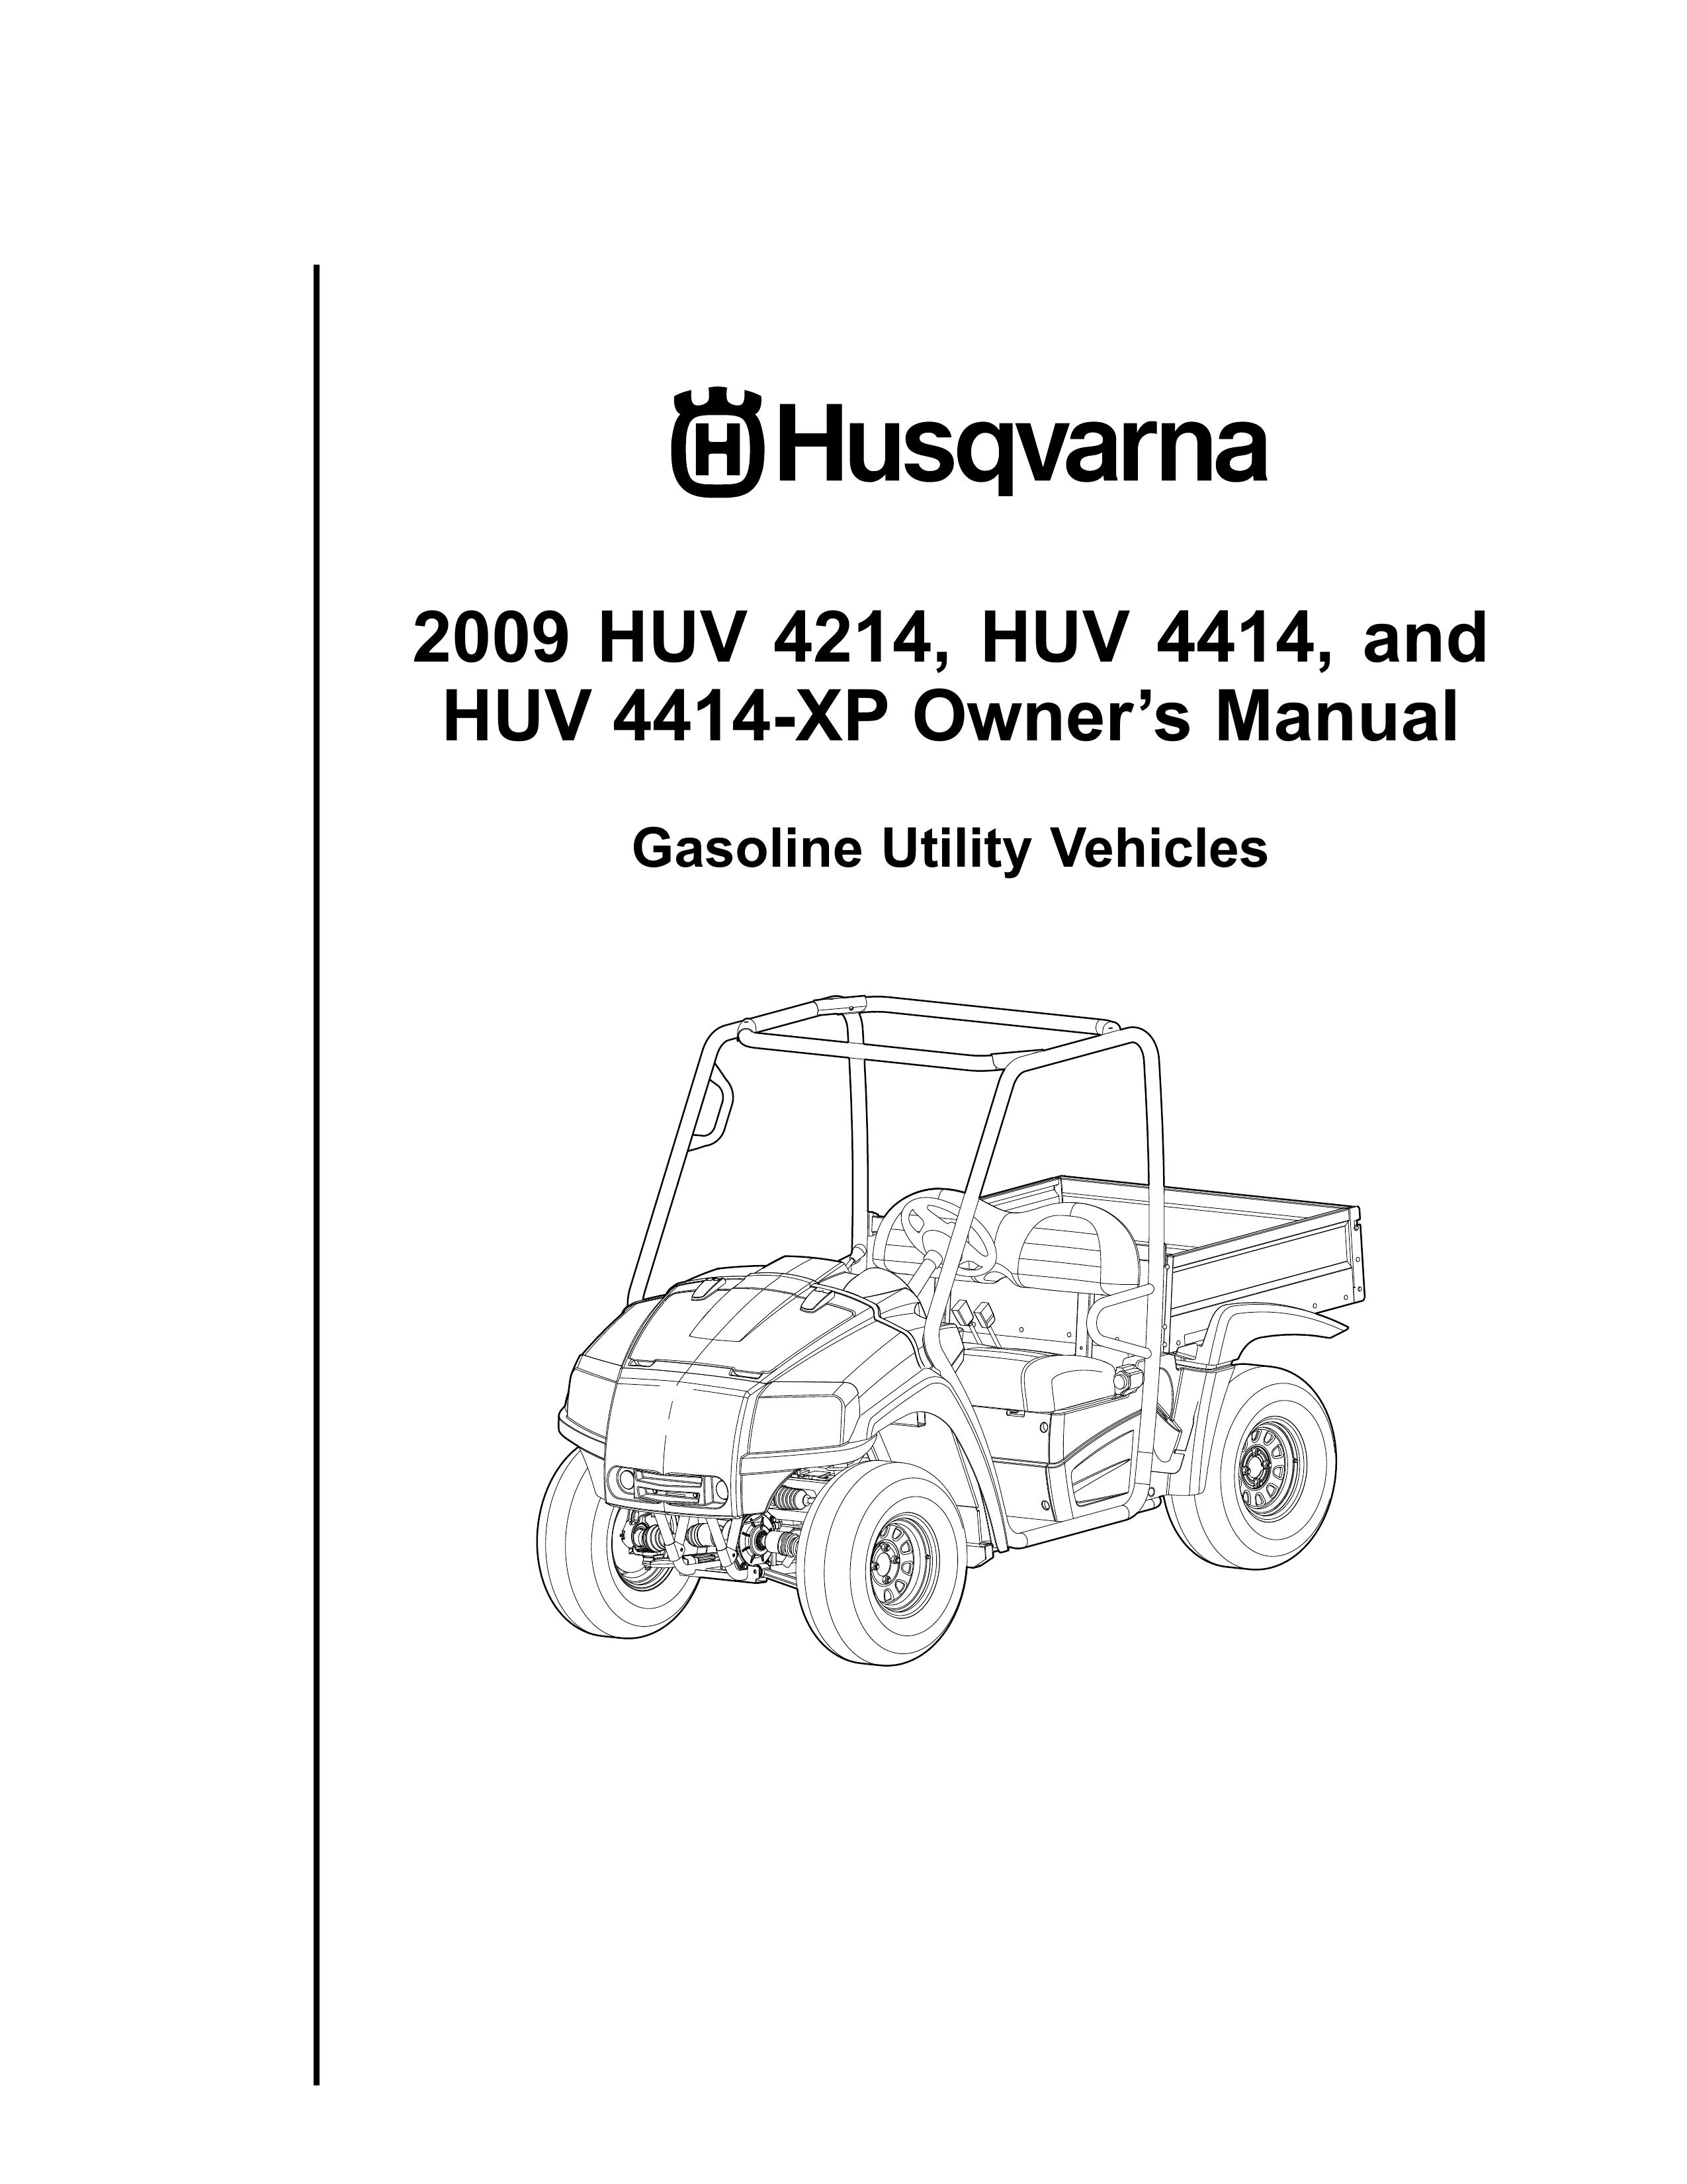 Husqvarna HUV 4414-XP Utility Vehicle User Manual